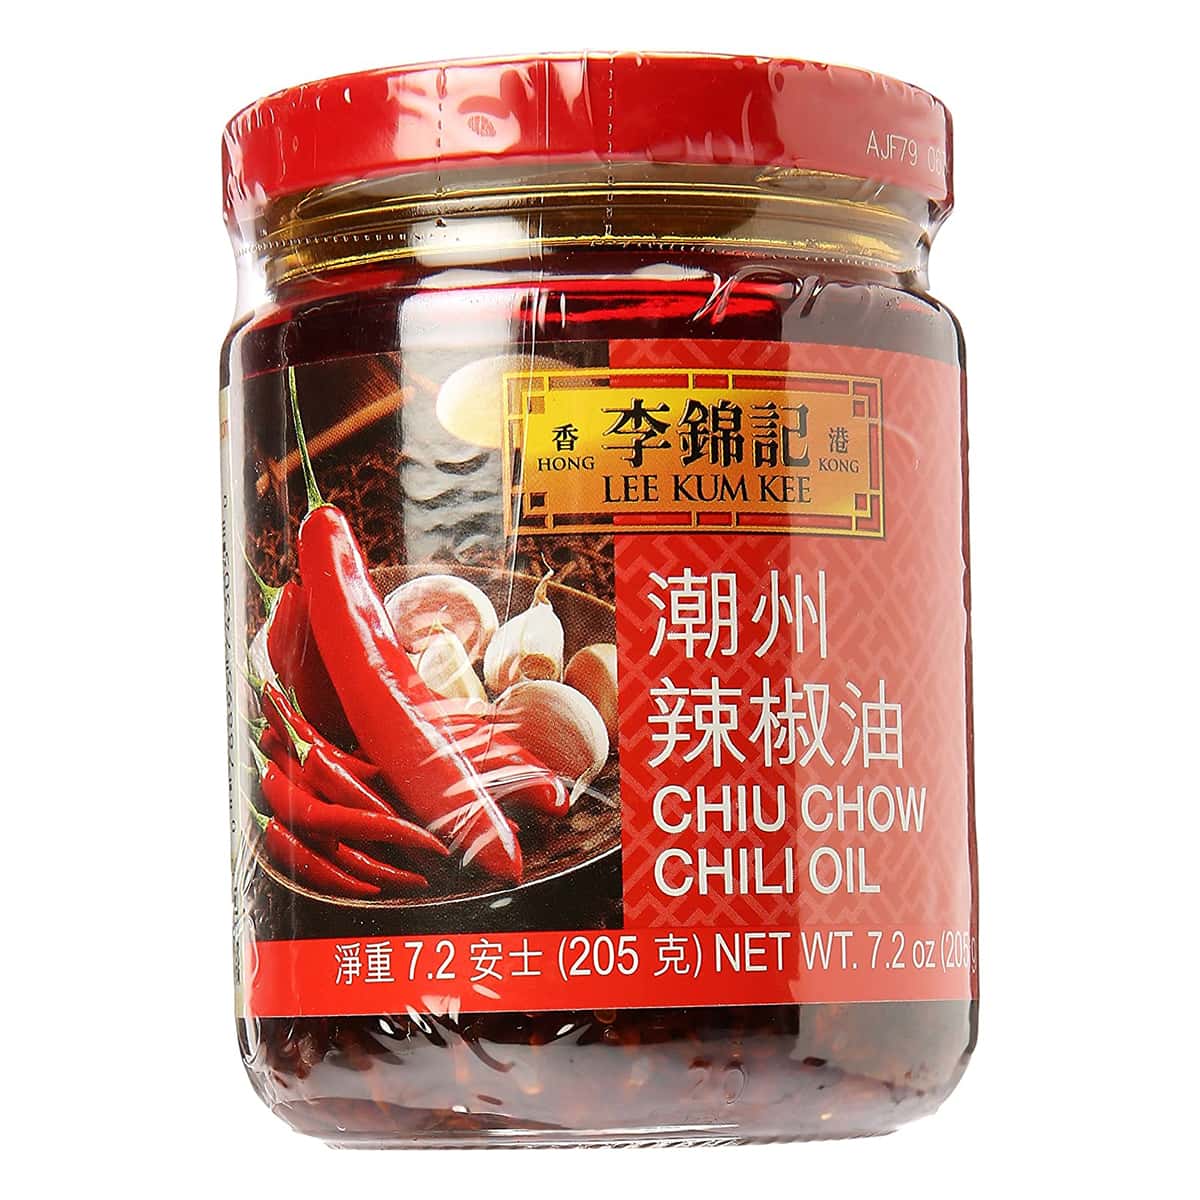 Buy Lee Kum Kee Chiu Chow Chili Oil - 205 gm